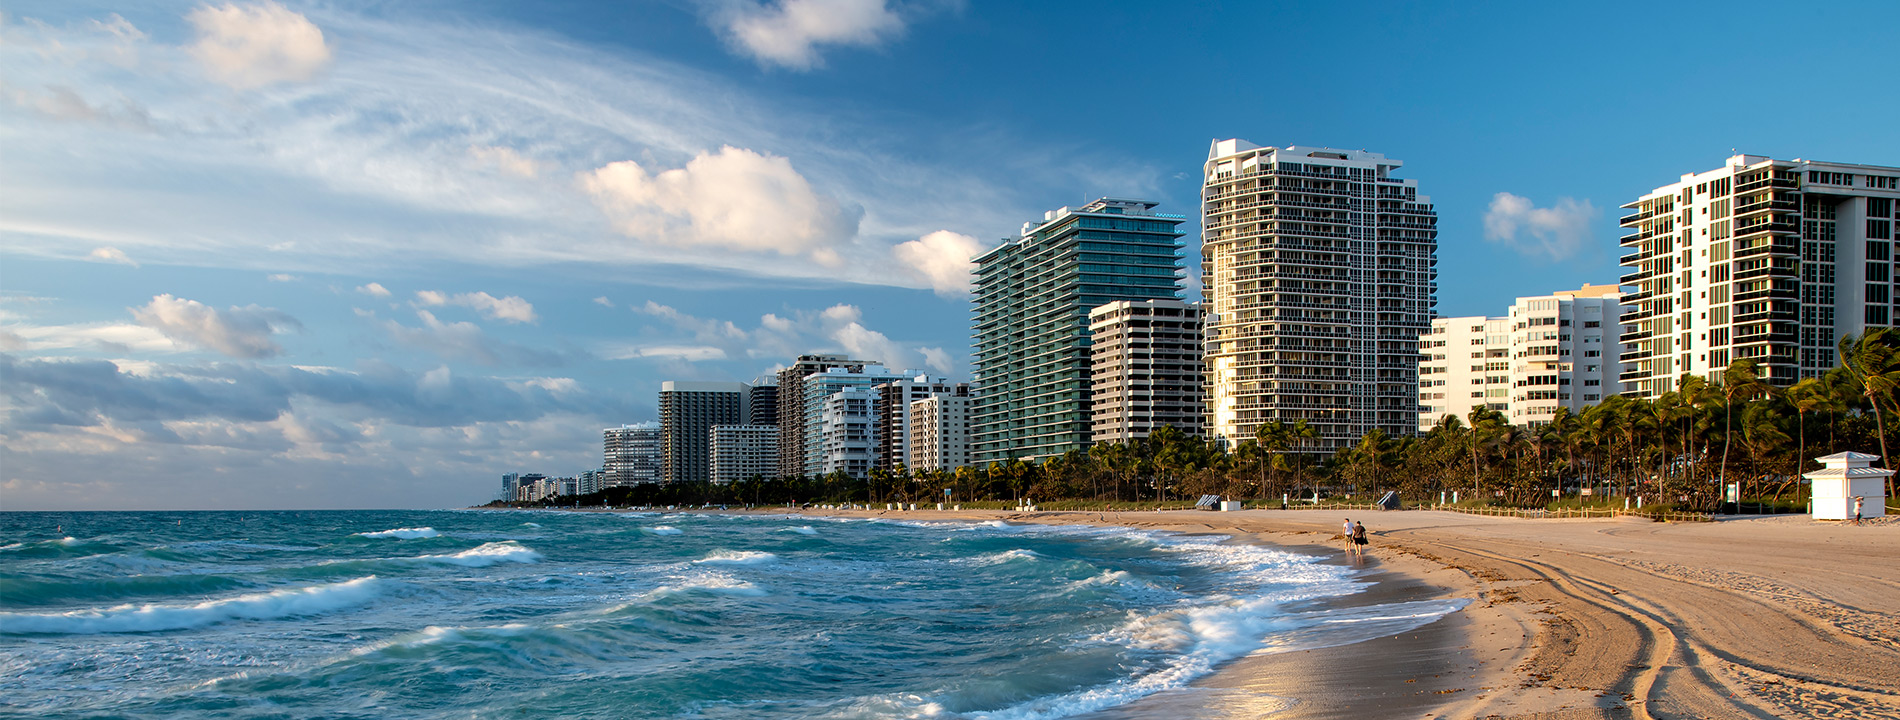 The coast of Miami Beach.